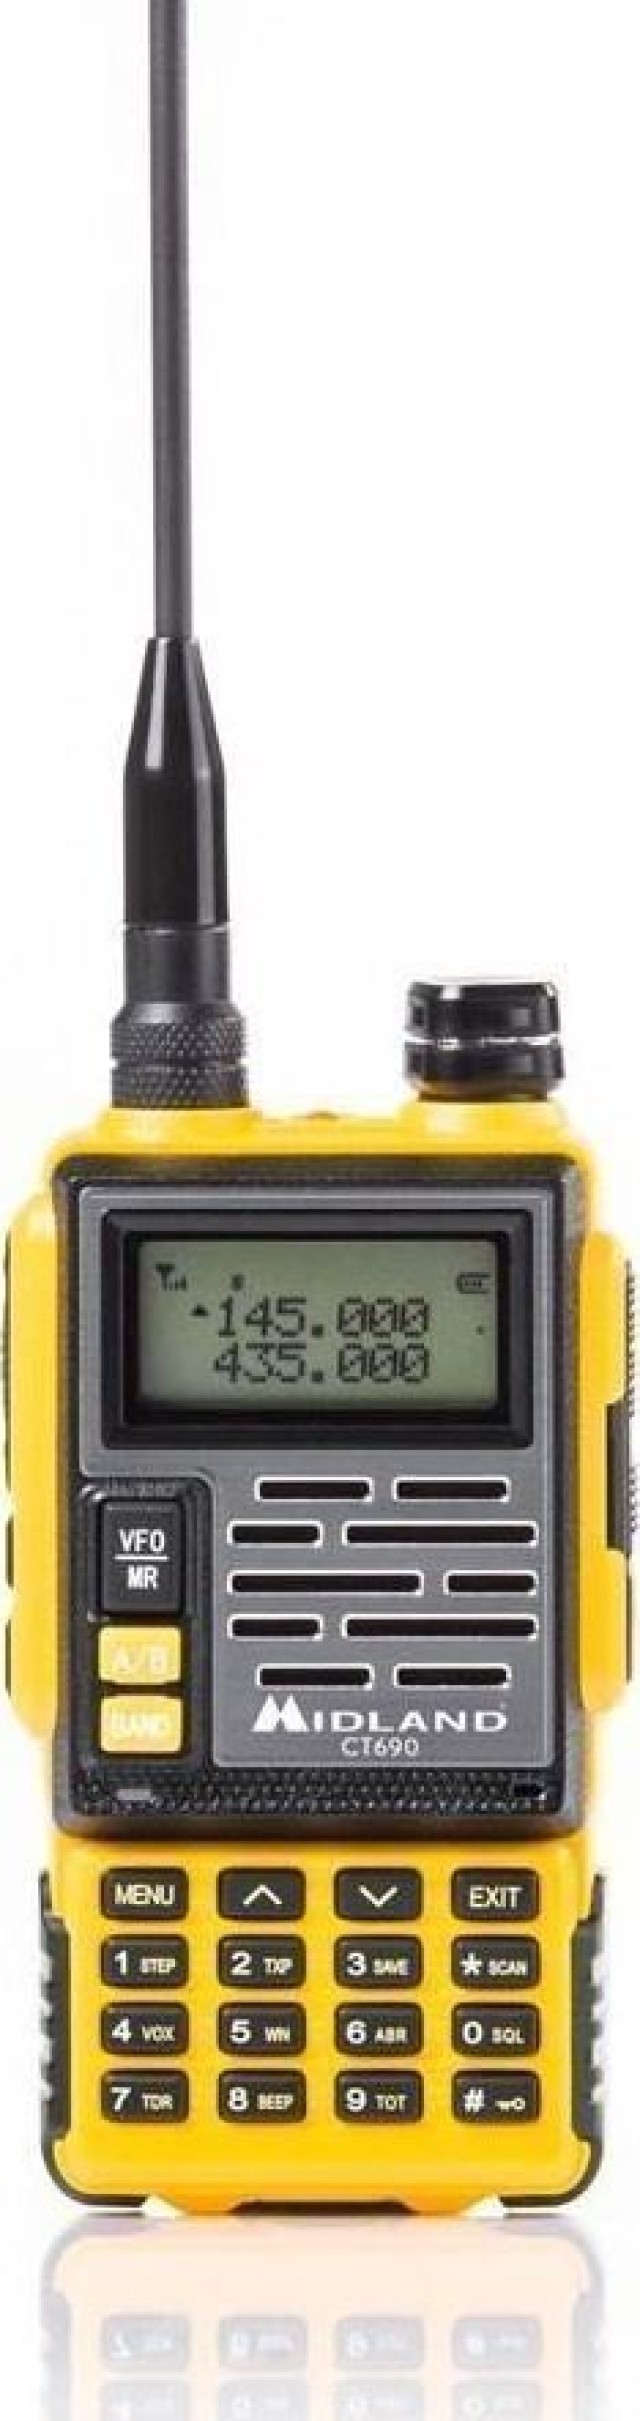 Midland CT-690 6 Watt Portable Dual Band VHF / UHF Transceiver (Yellow)